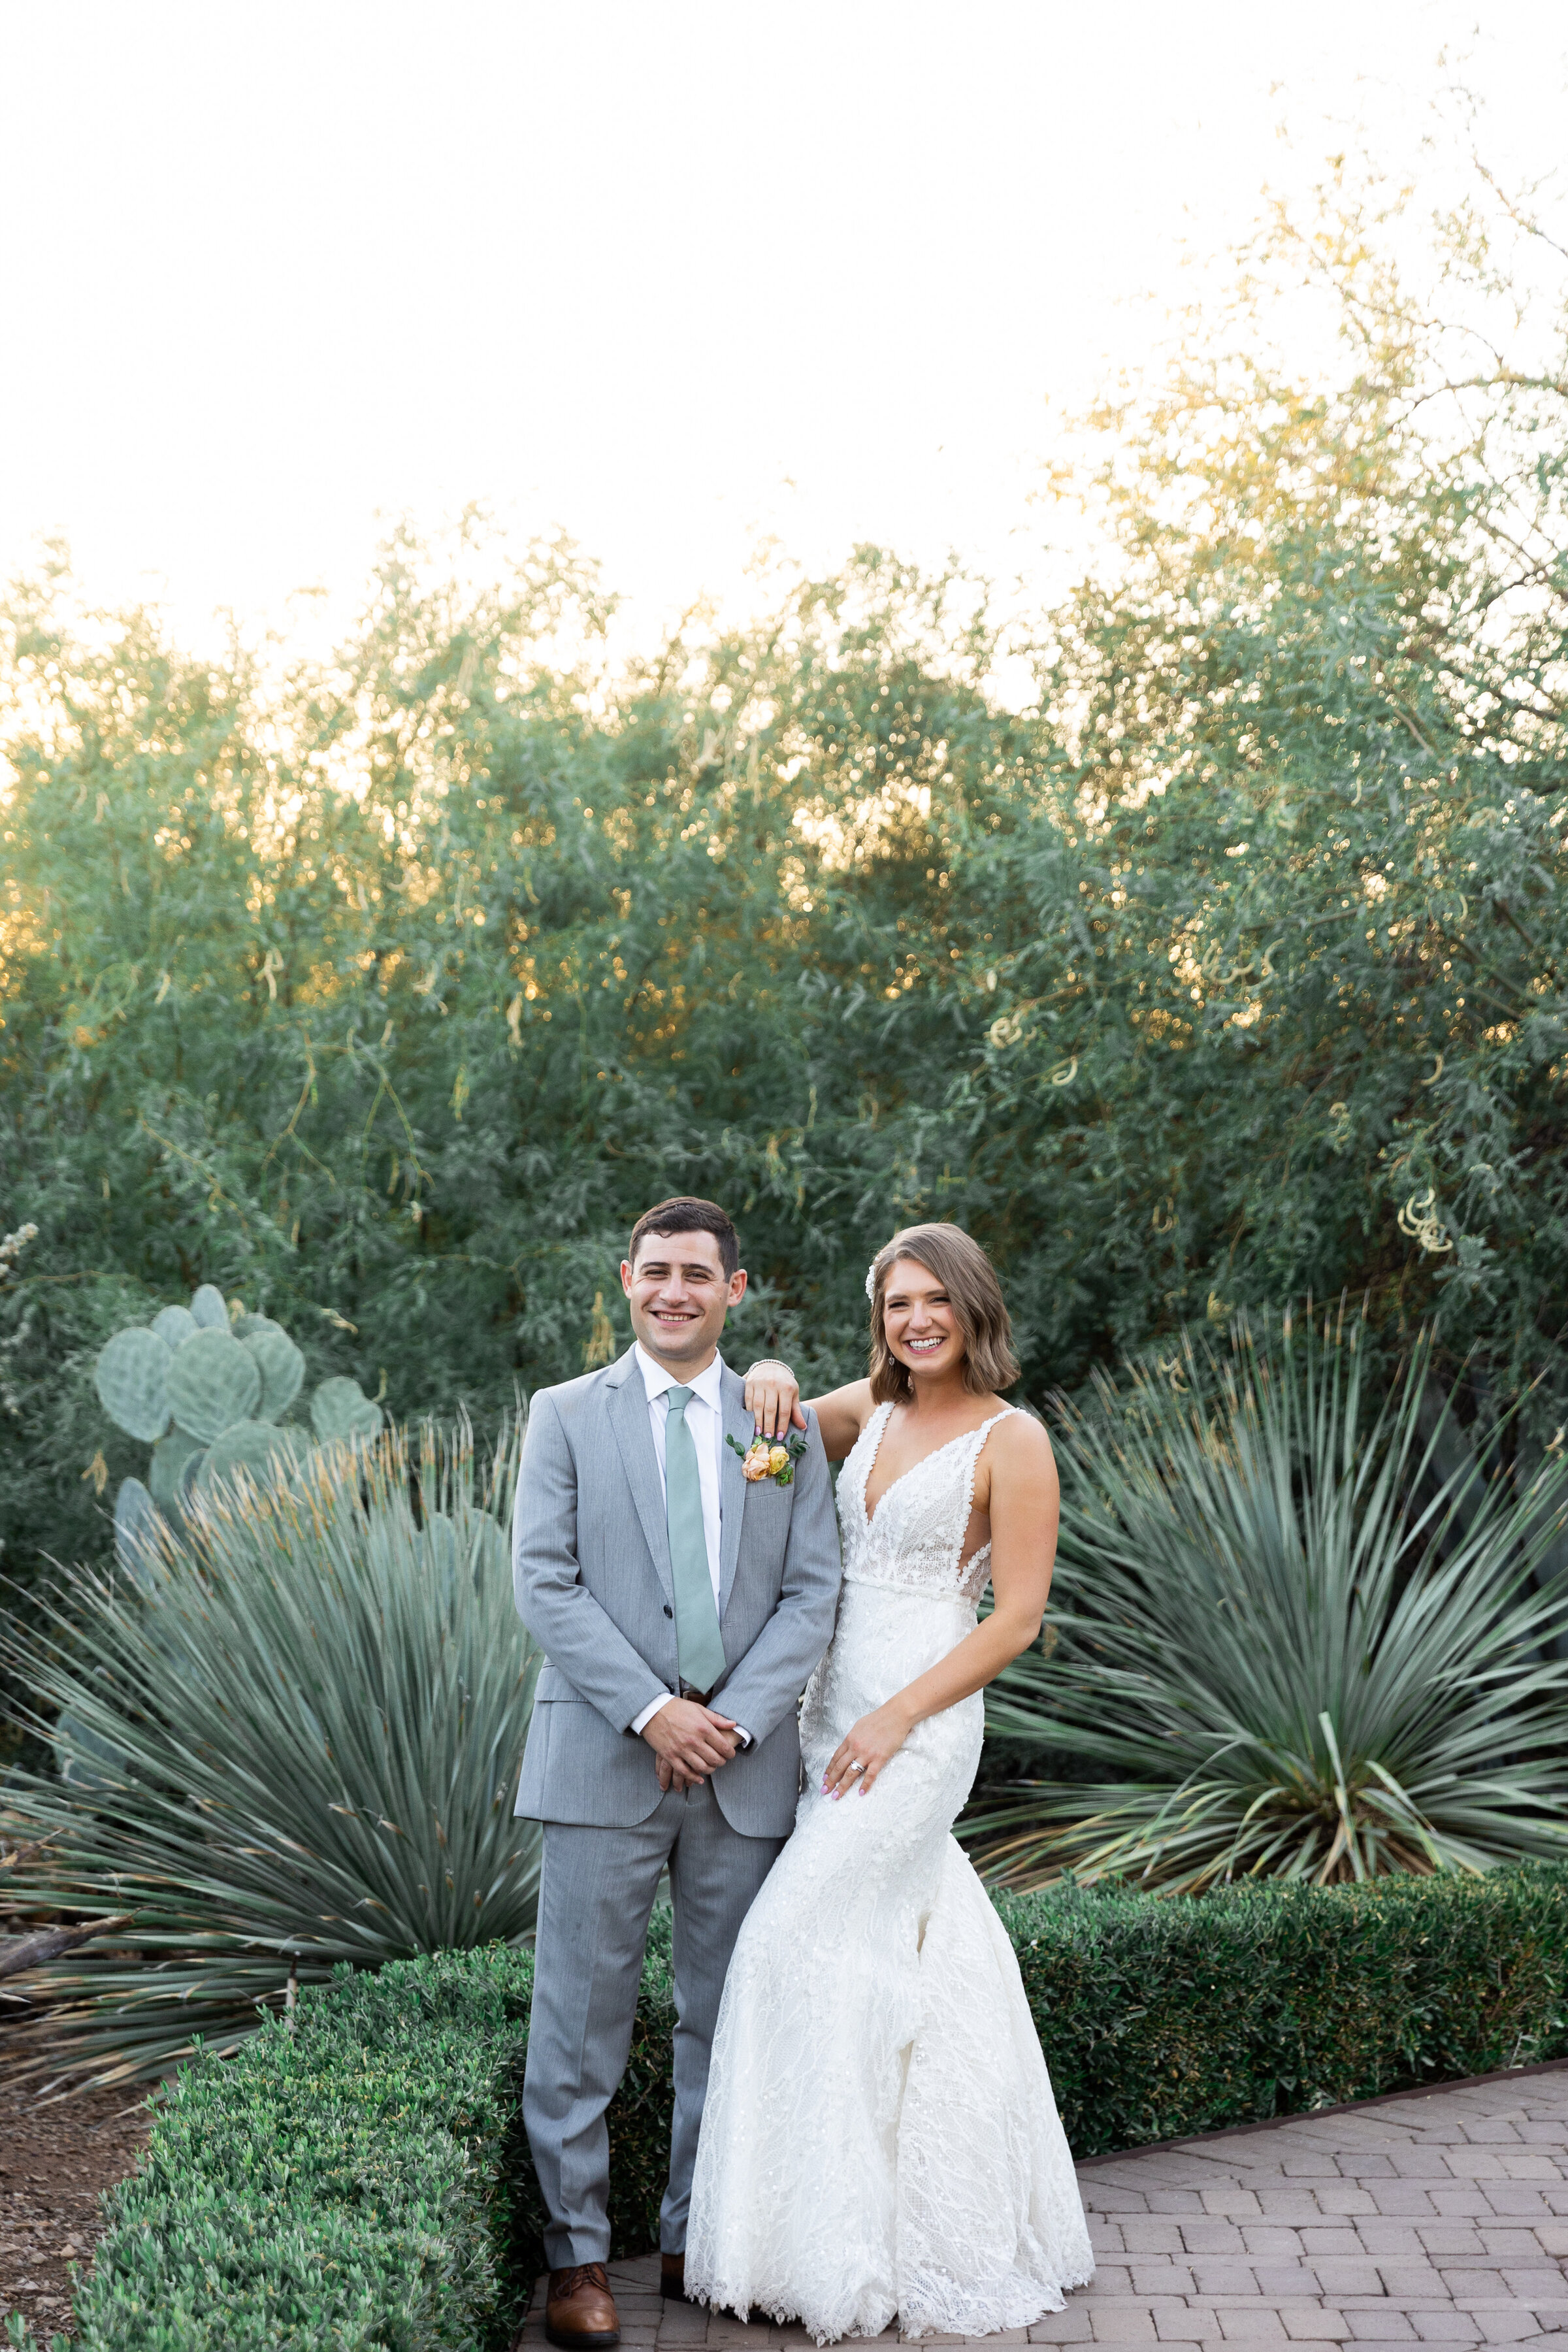 Karlie Colleen Photography - Emily & Mike - Wedding Sneak Peek - El Chorro - Arizona - Revel Wedding Co-312